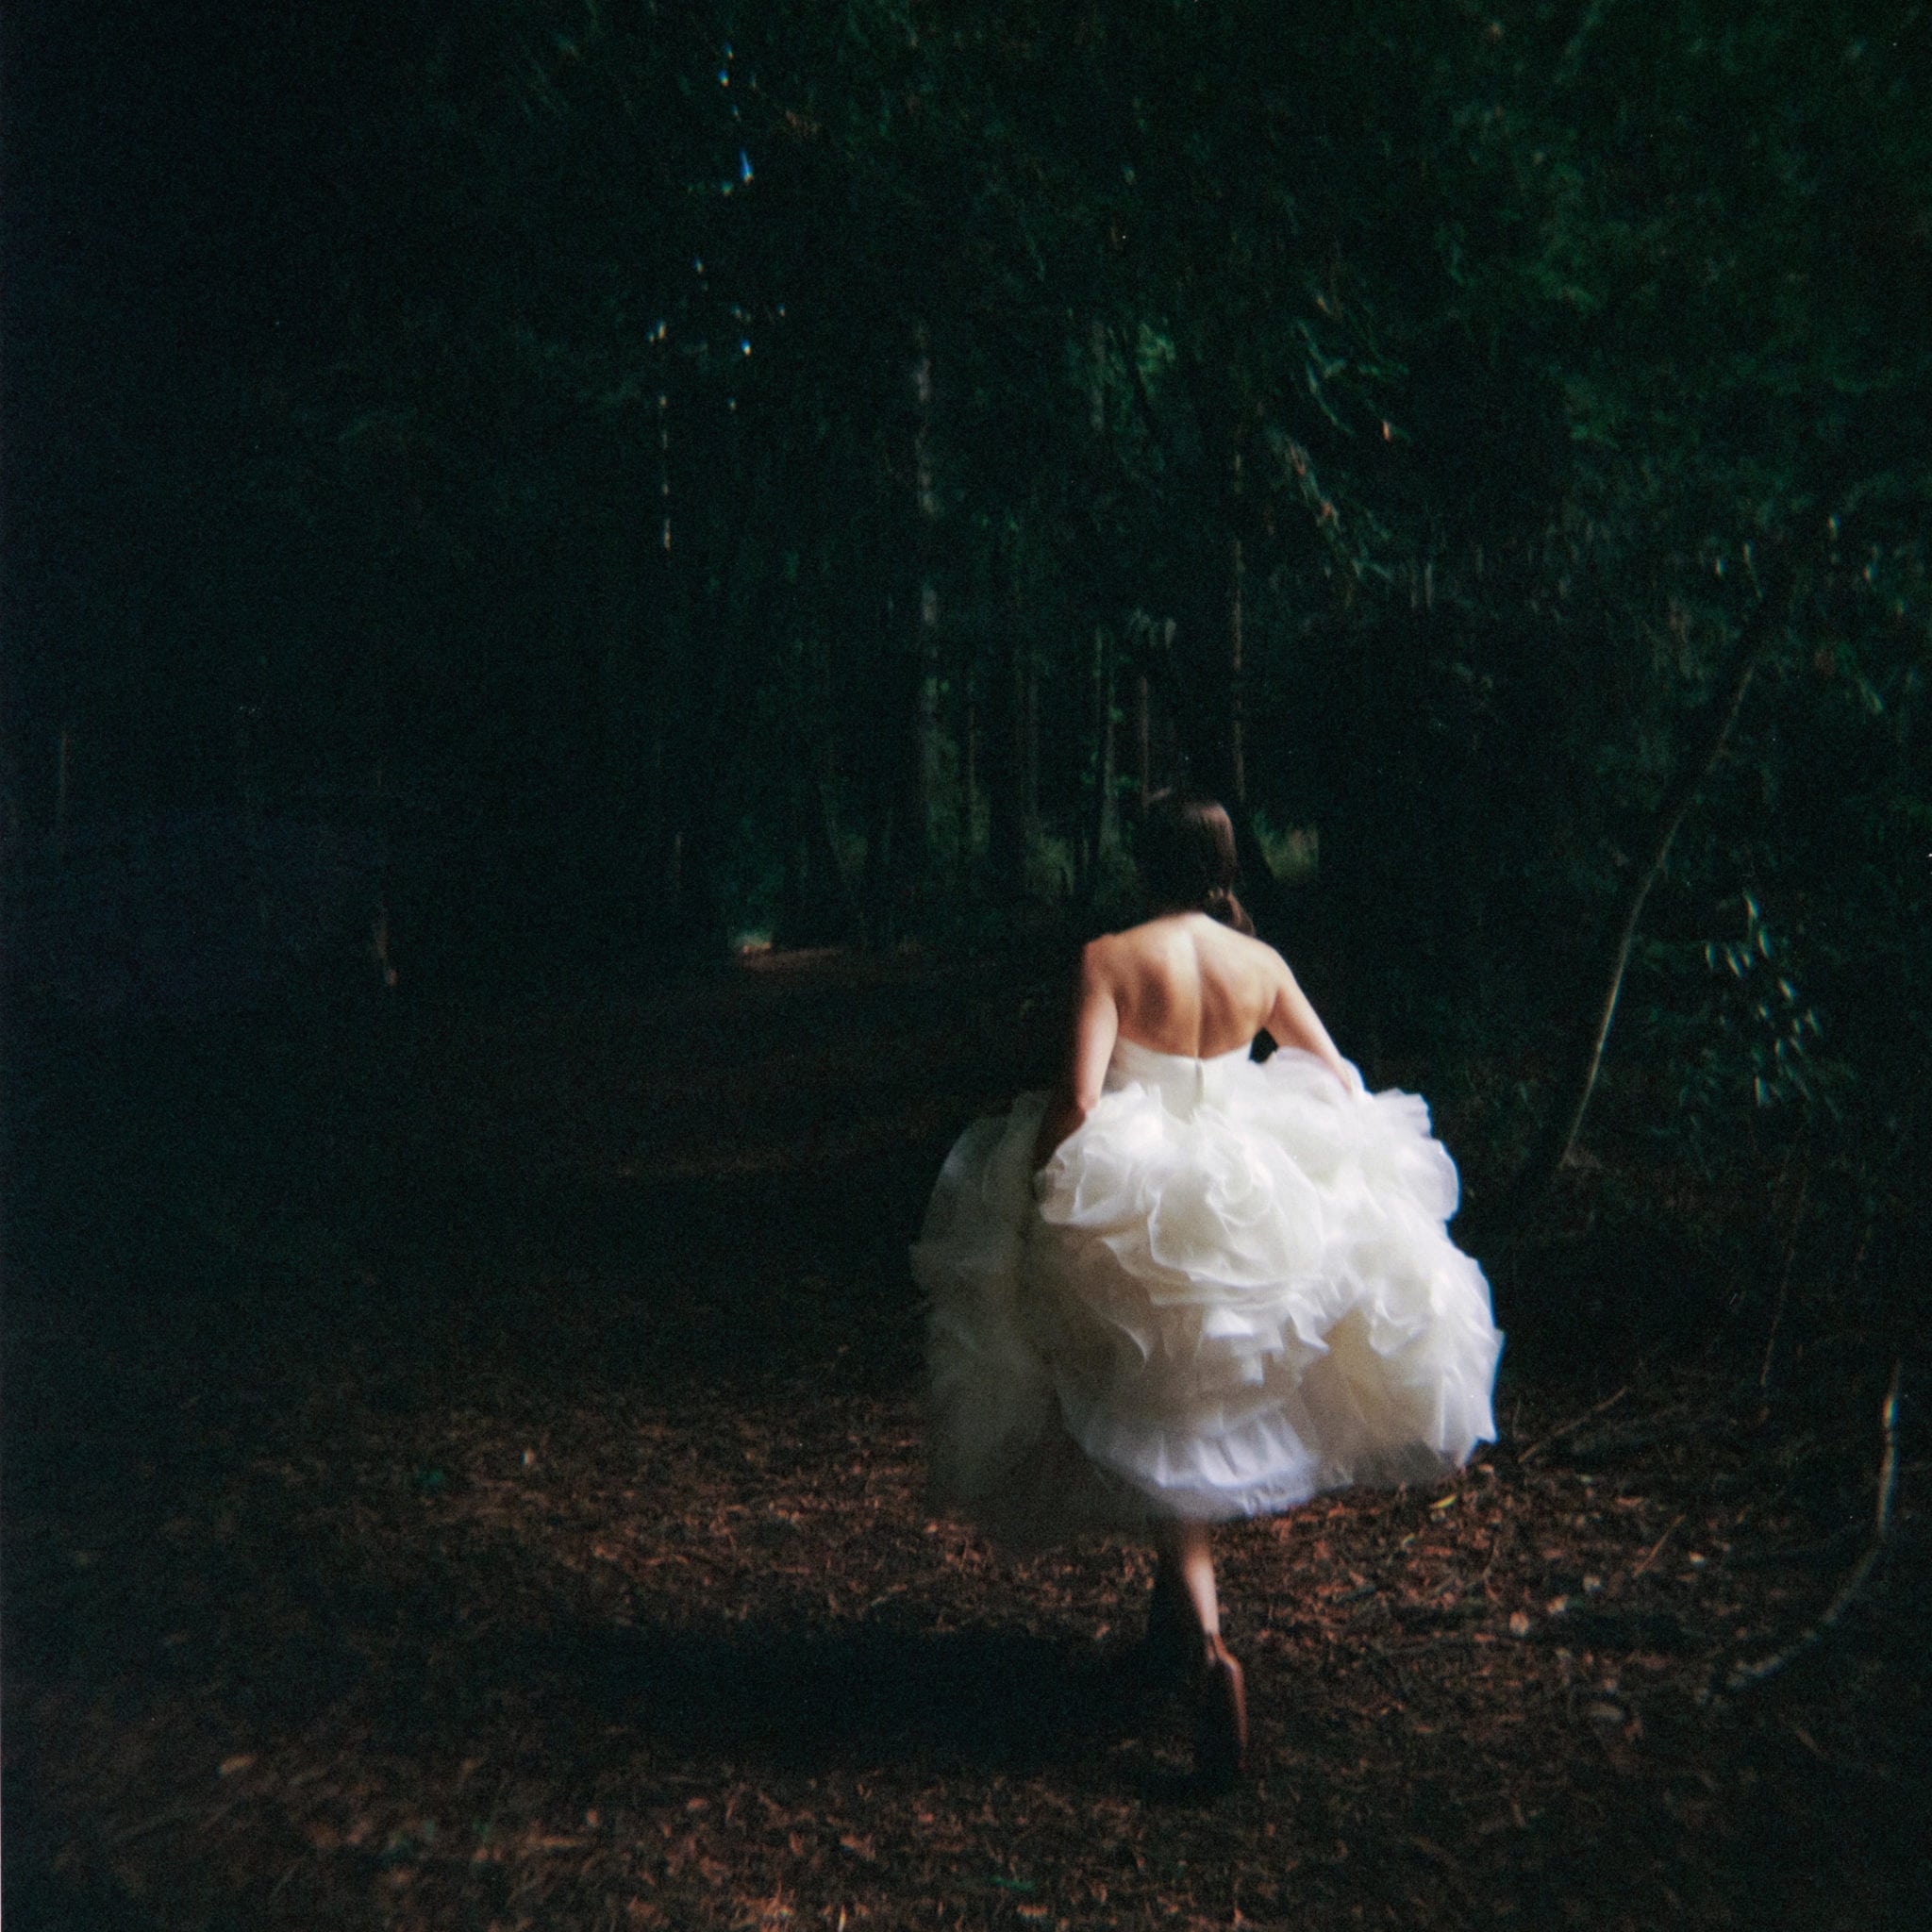 A woman gathers her full, ruffled wedding dress skirt around her and walks into the dark woods